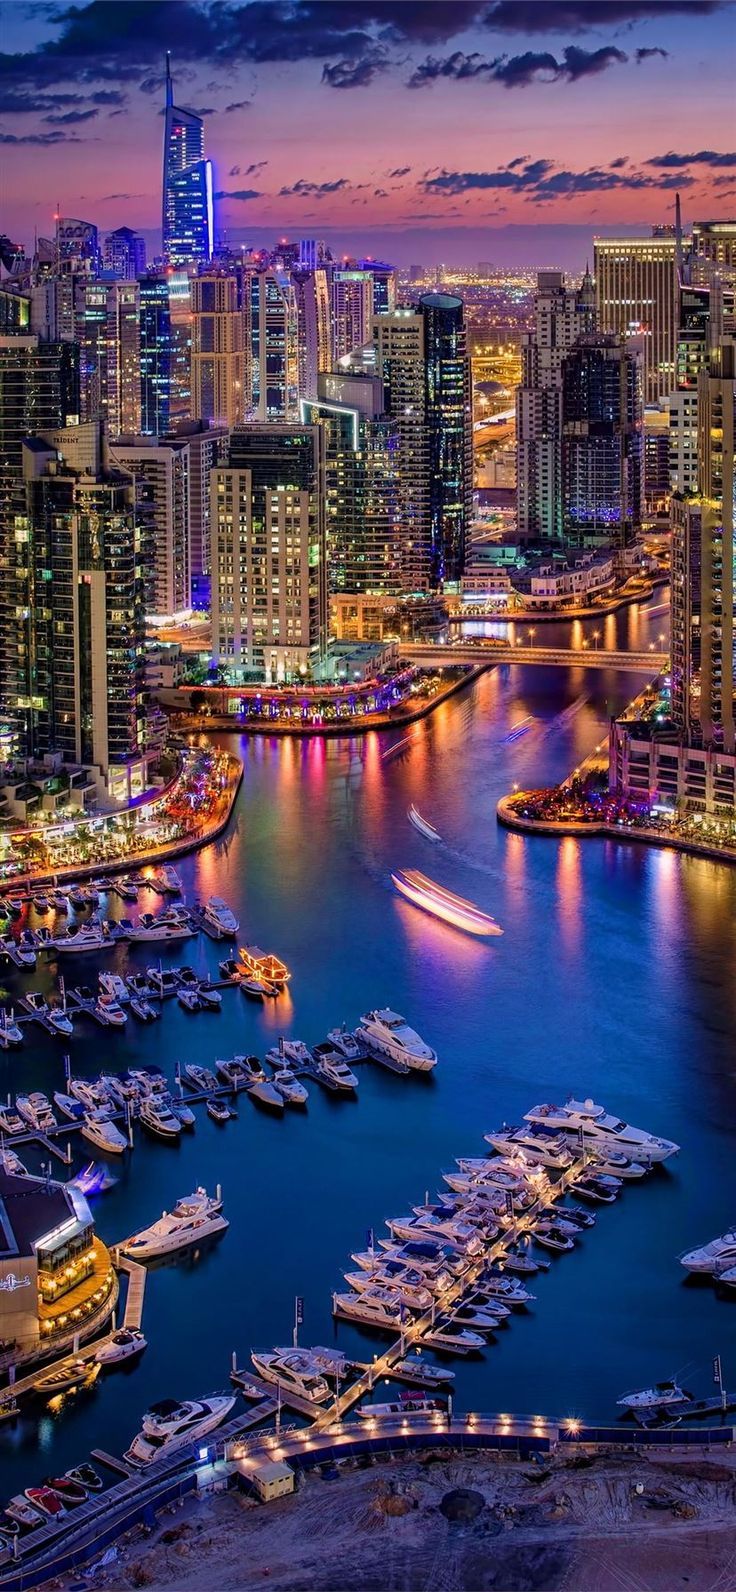 Dubai iPhone 11 Wallpaper Free Download. Dubai vacation, City aesthetic, Beautiful places to travel